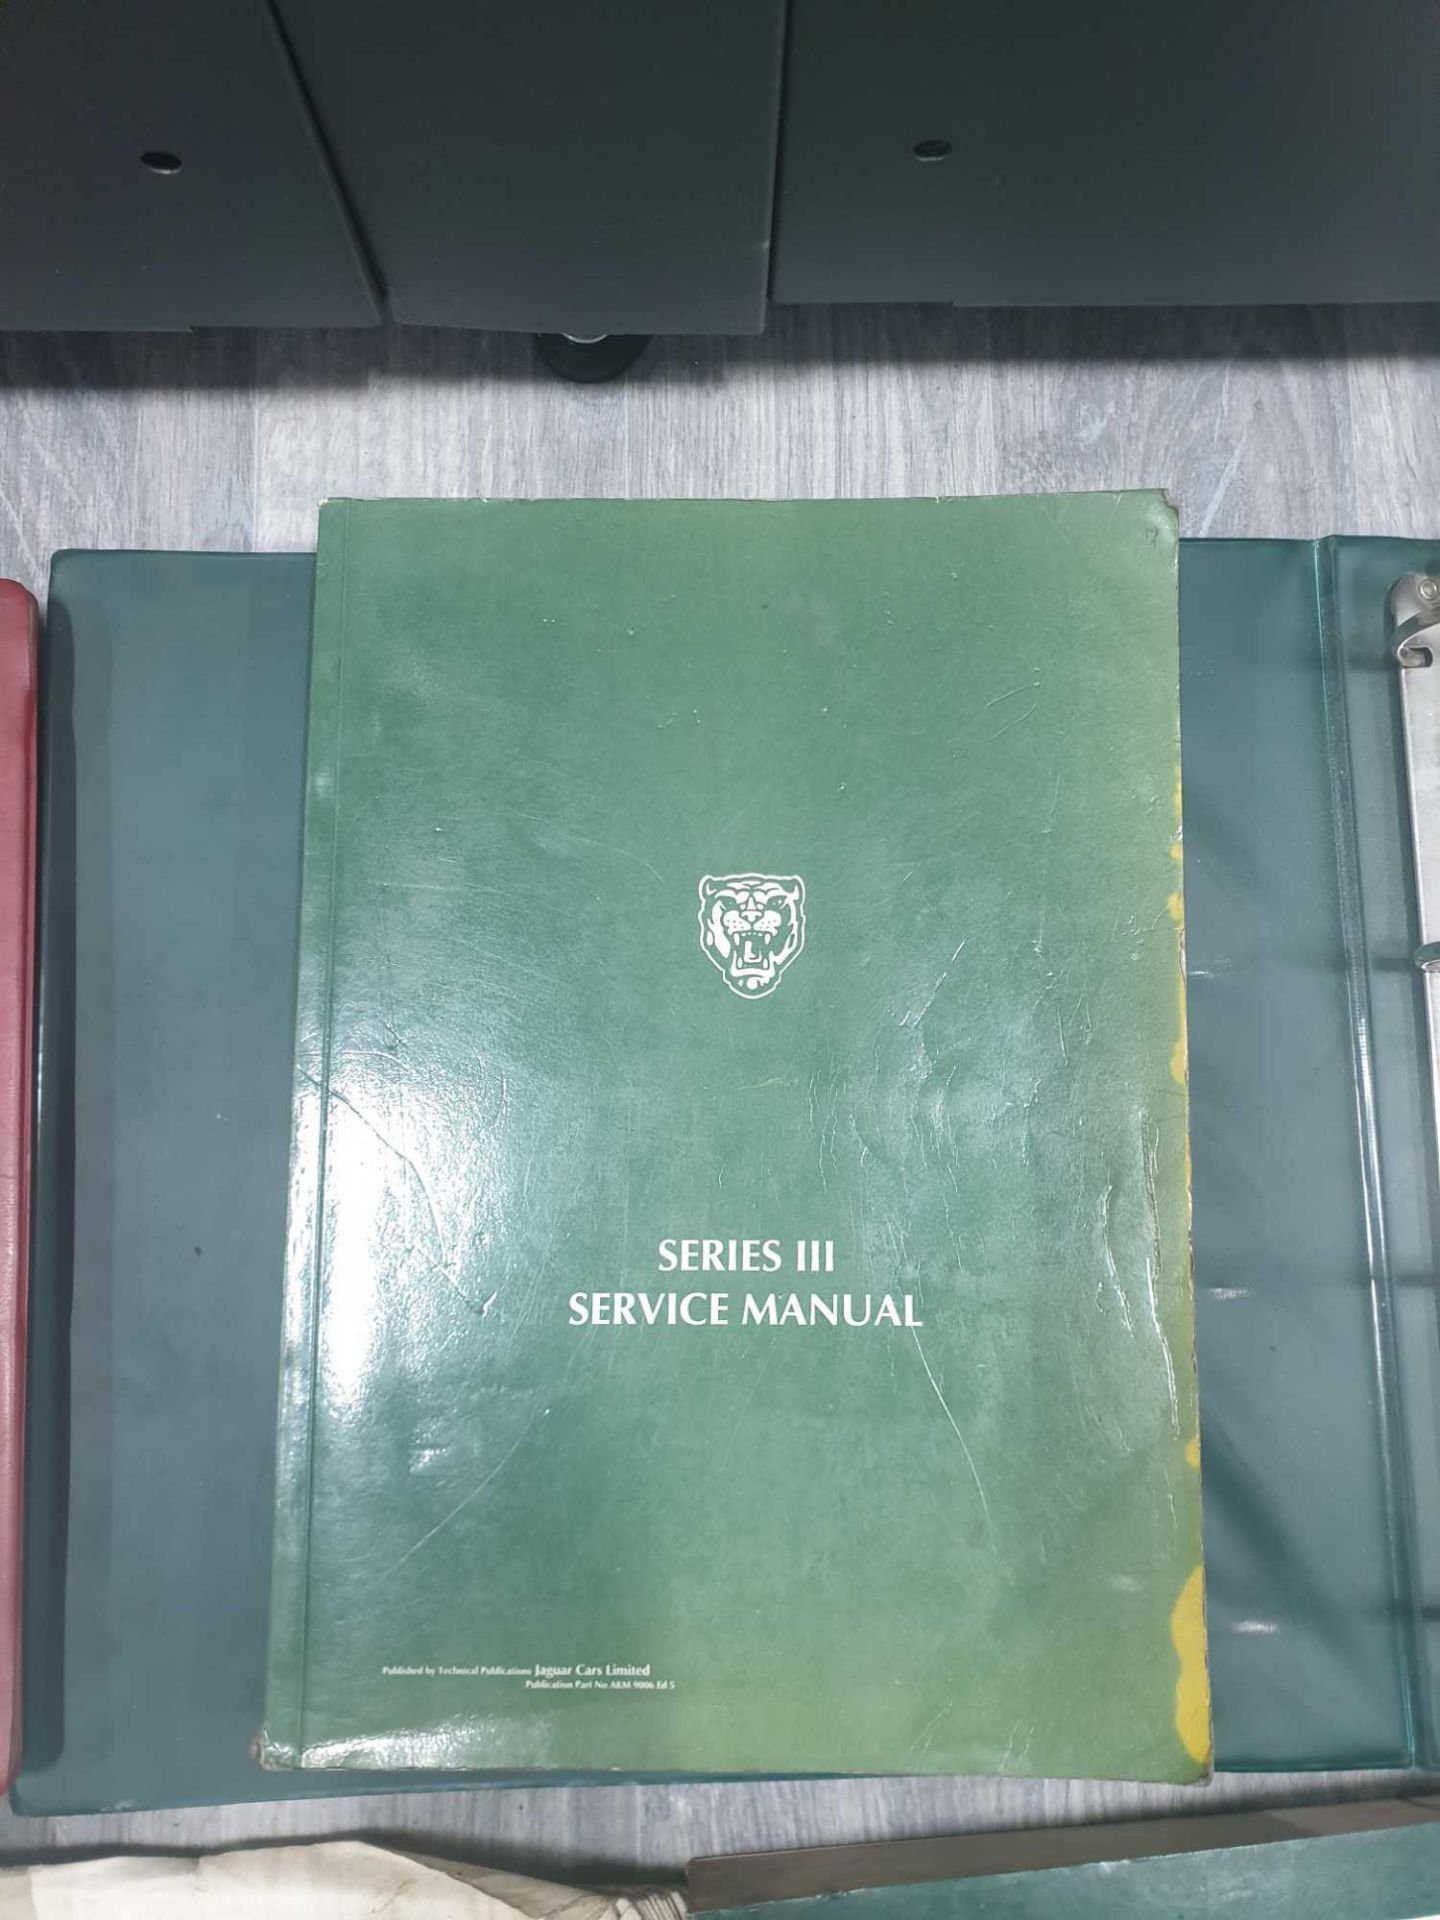 Rare classic Jaguar service manuals - Image 4 of 11